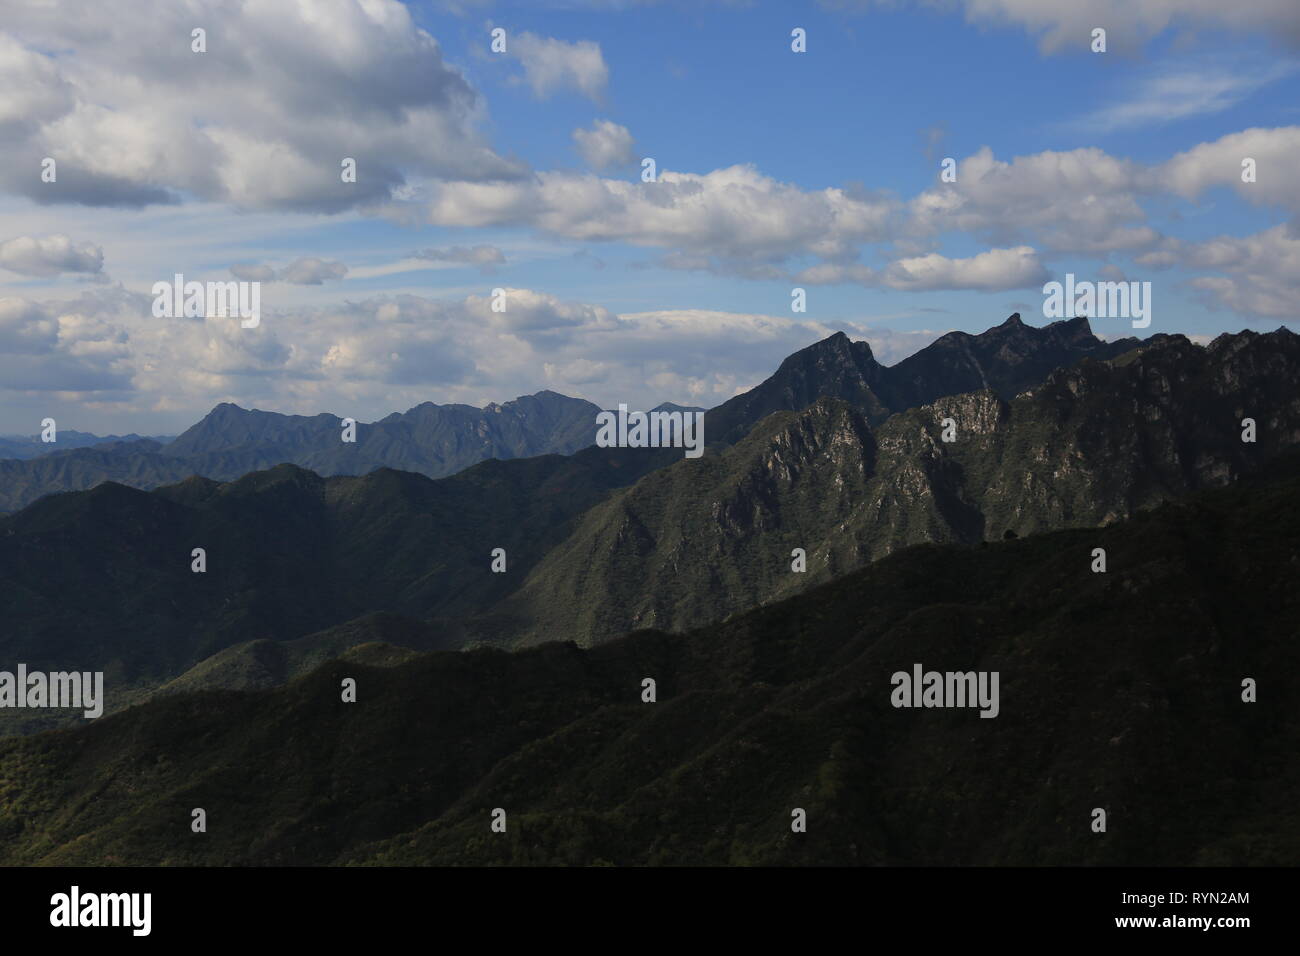 The Great Wall surrounding mountains at Mutianyu, Beijing, China Stock Photo